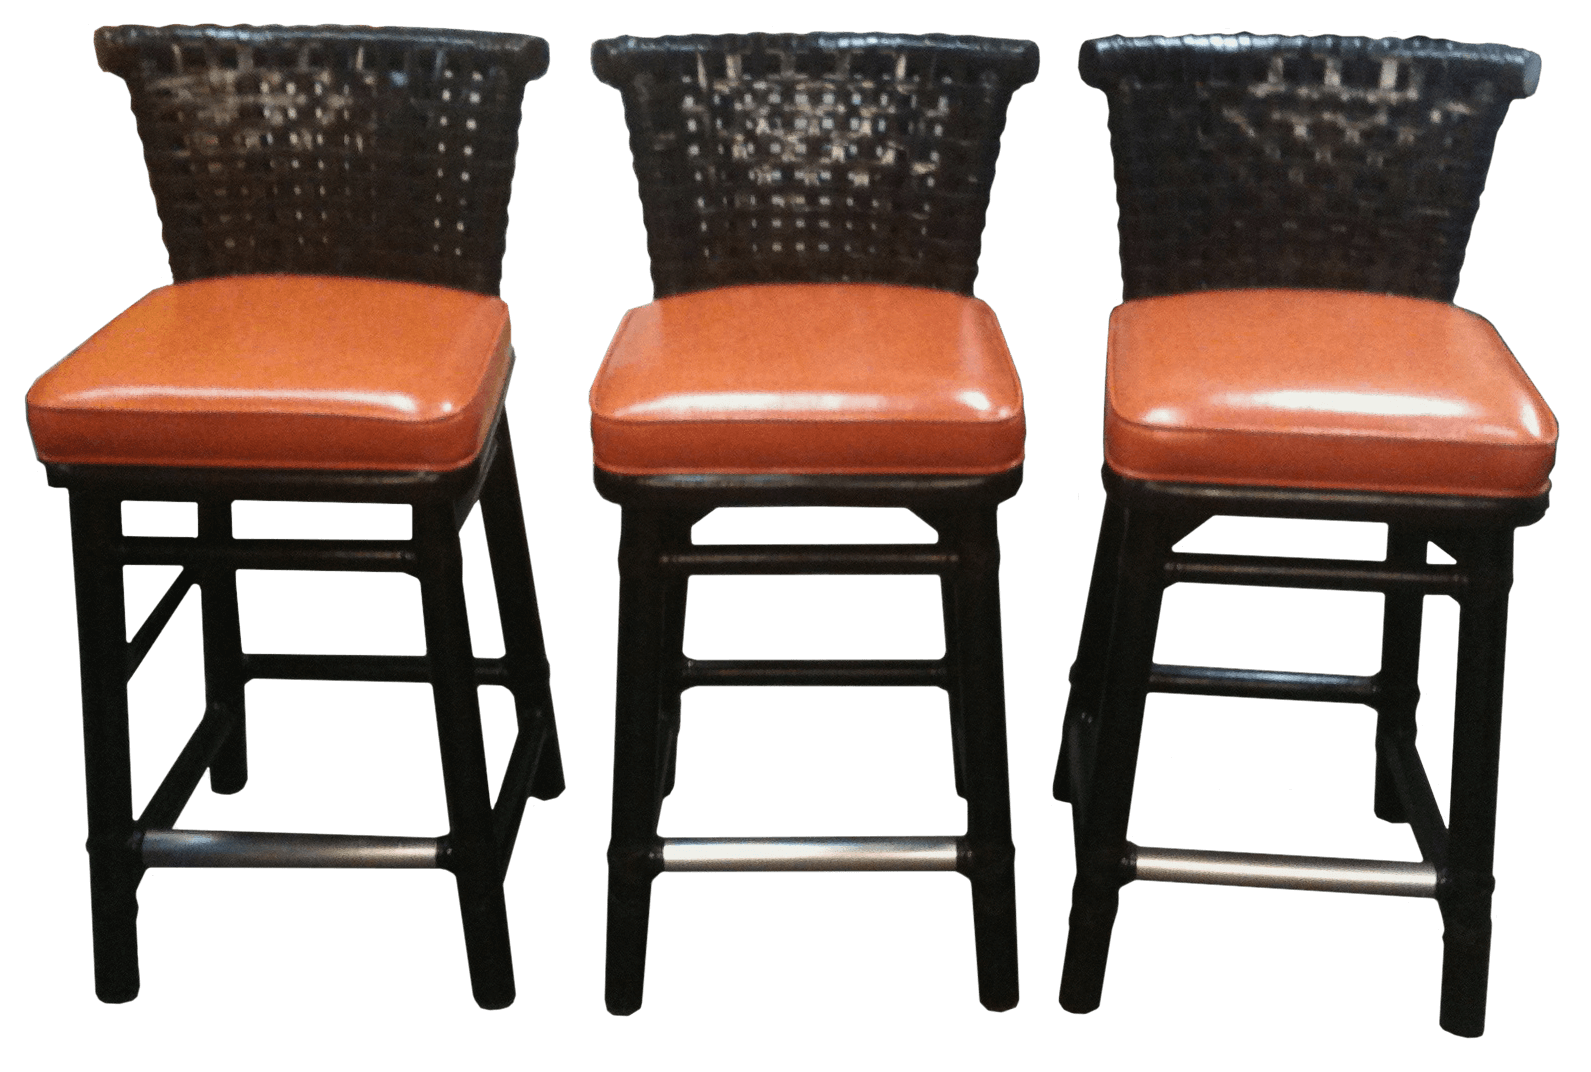 Reupholstered Back Bay bar stools with orange cushions